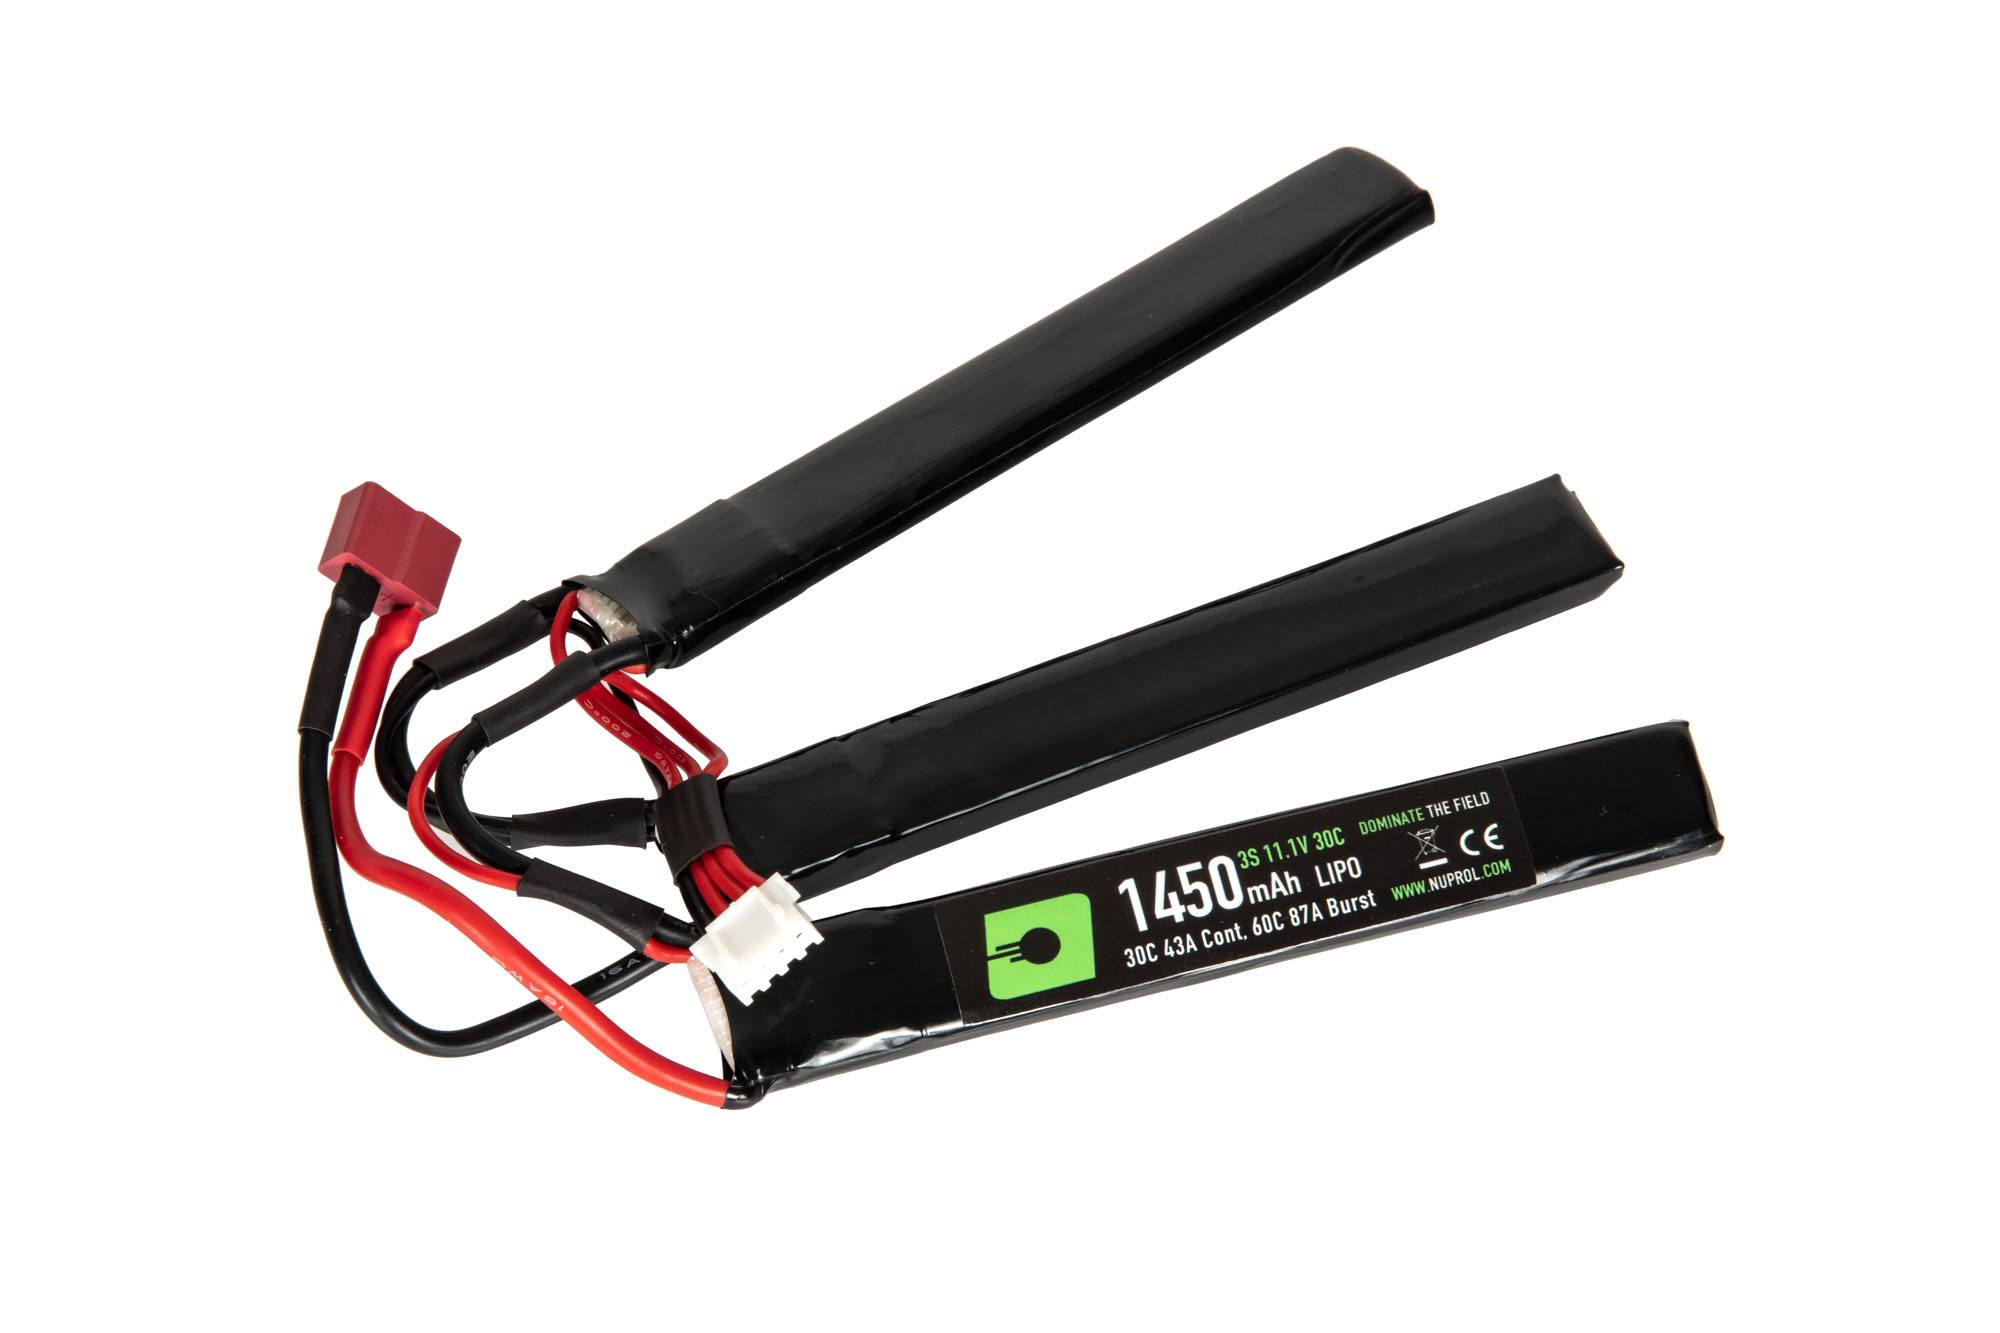 LiPo 11.1V 1450mah 30C Battery - Nunchuck Type - T-Connect (Deans)